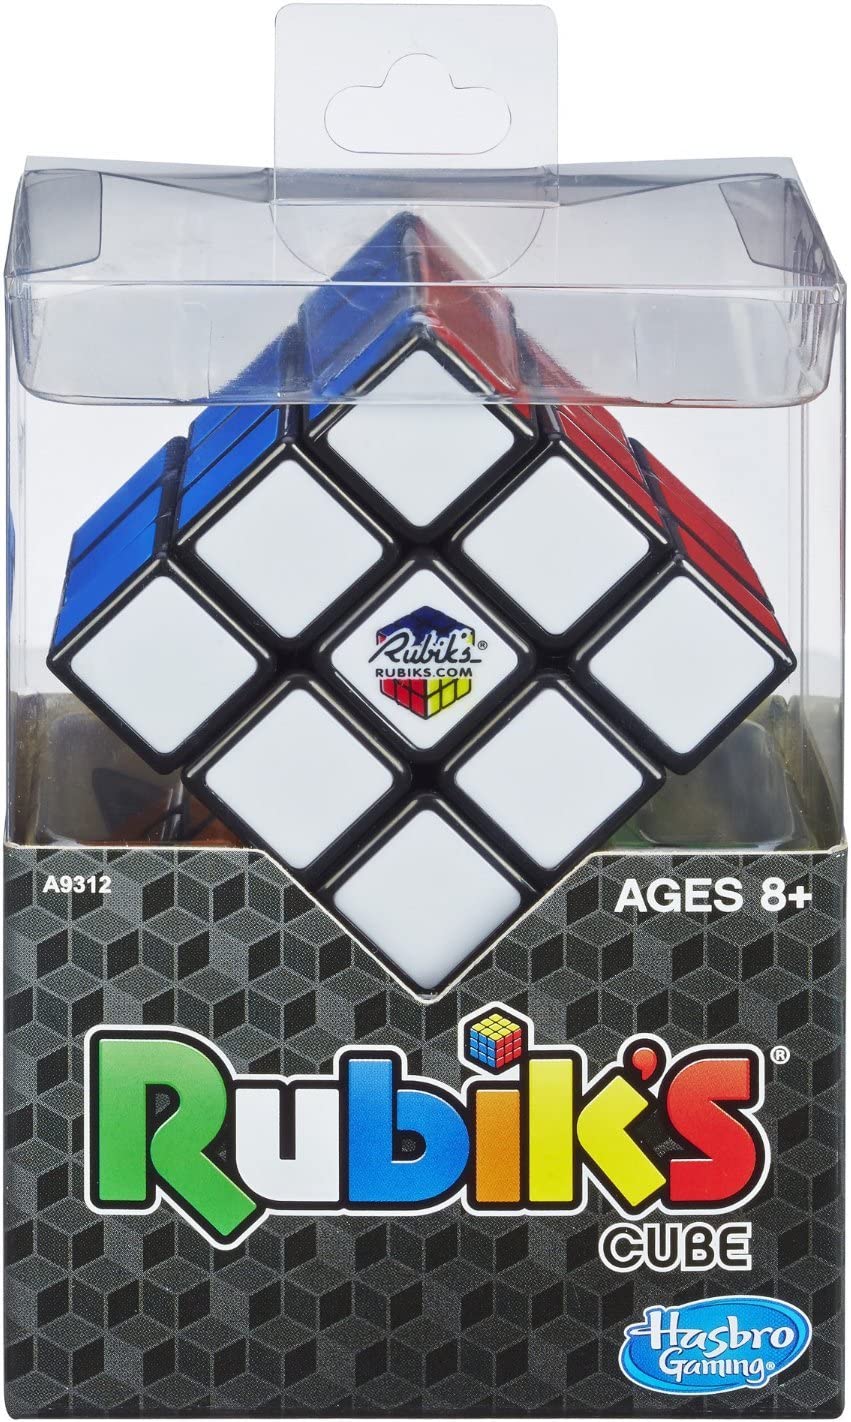 Rubik's Cube single player game